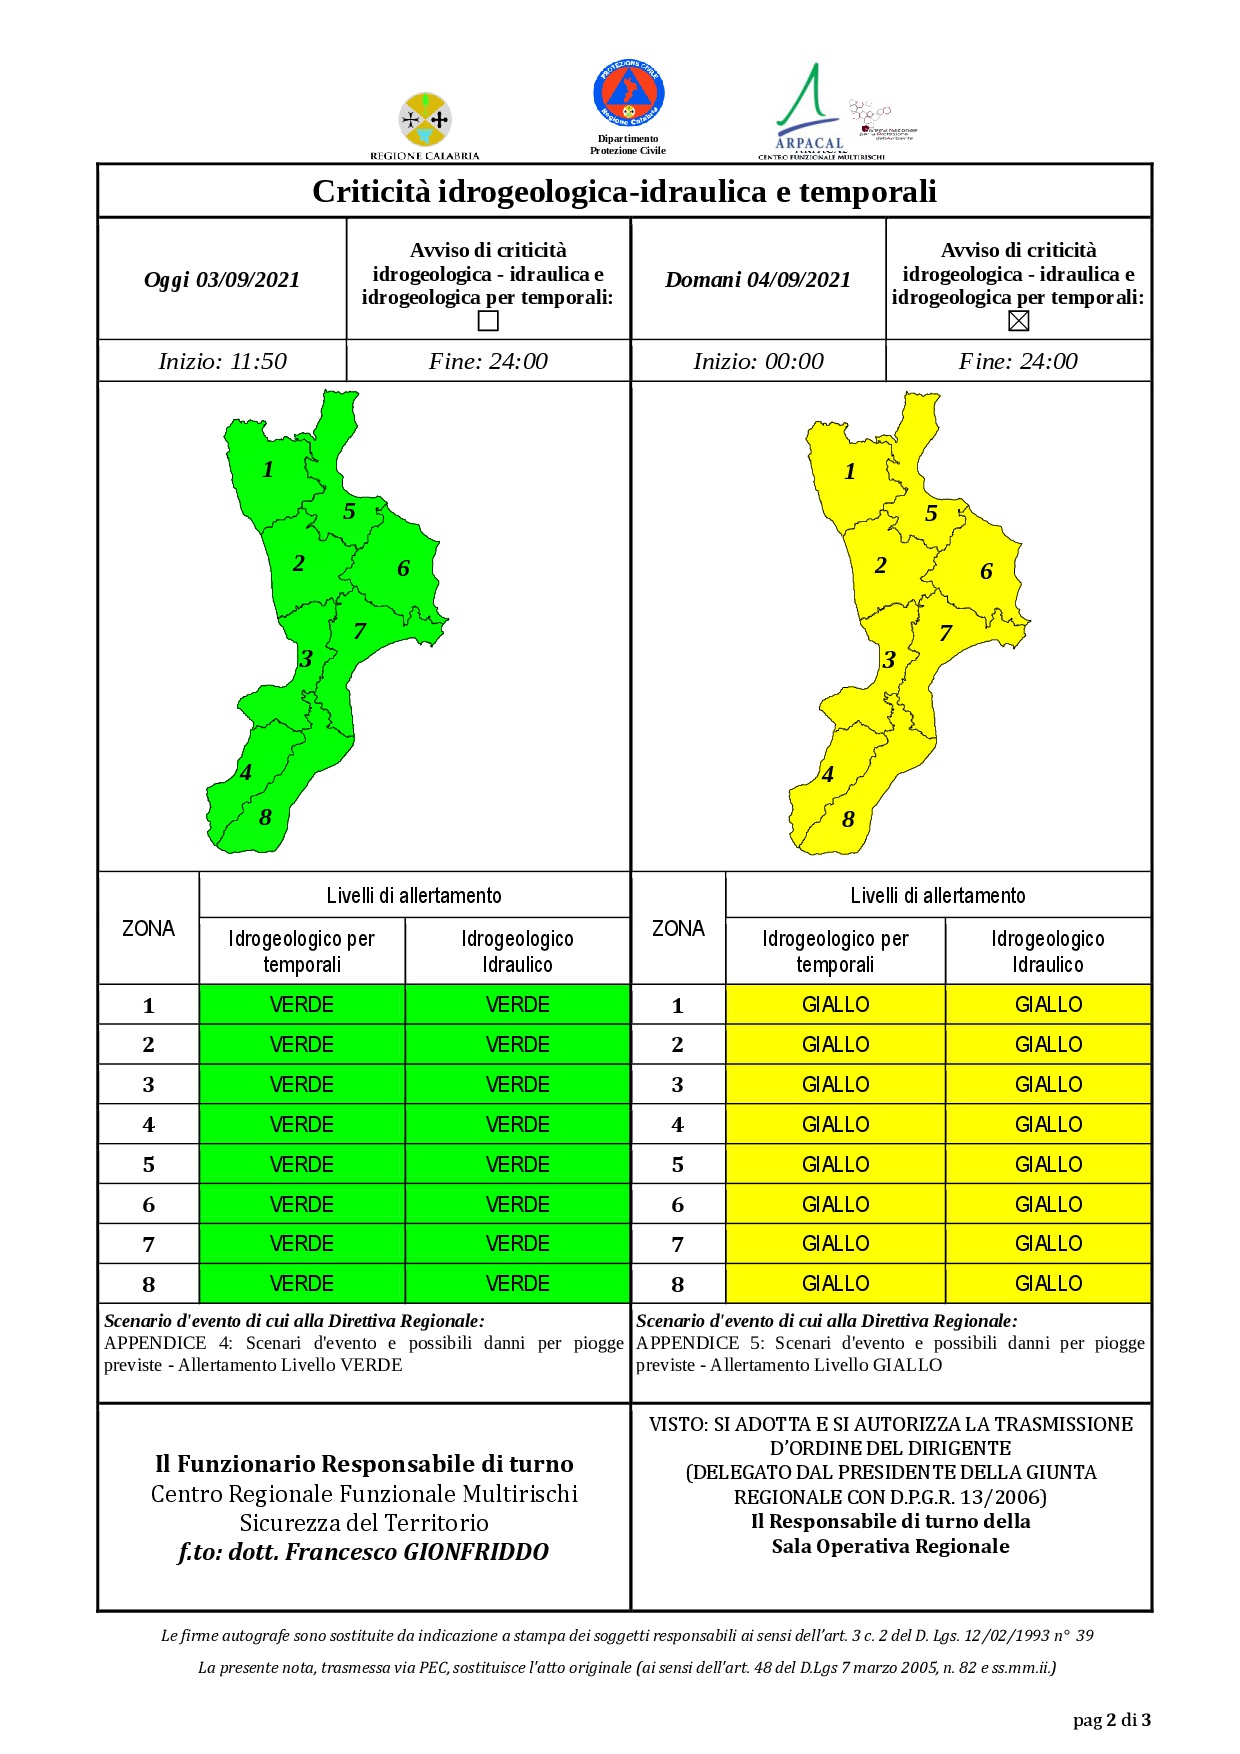 Criticità idrogeologica-idraulica e temporali in Calabria 03-09-2021